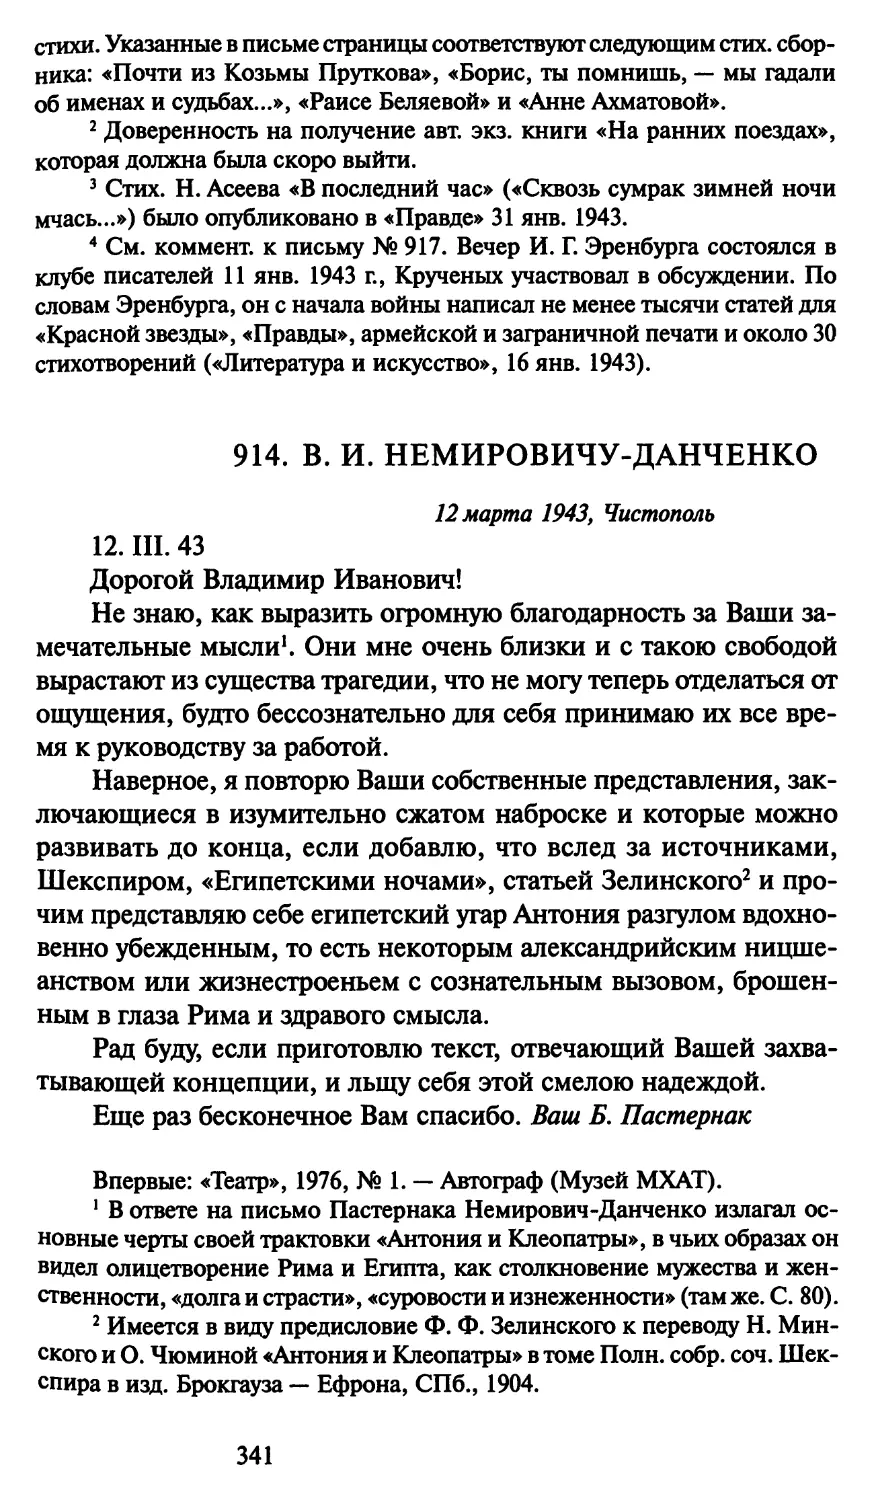 914. В. И. Немировичу-Данченко 12 марта 1943